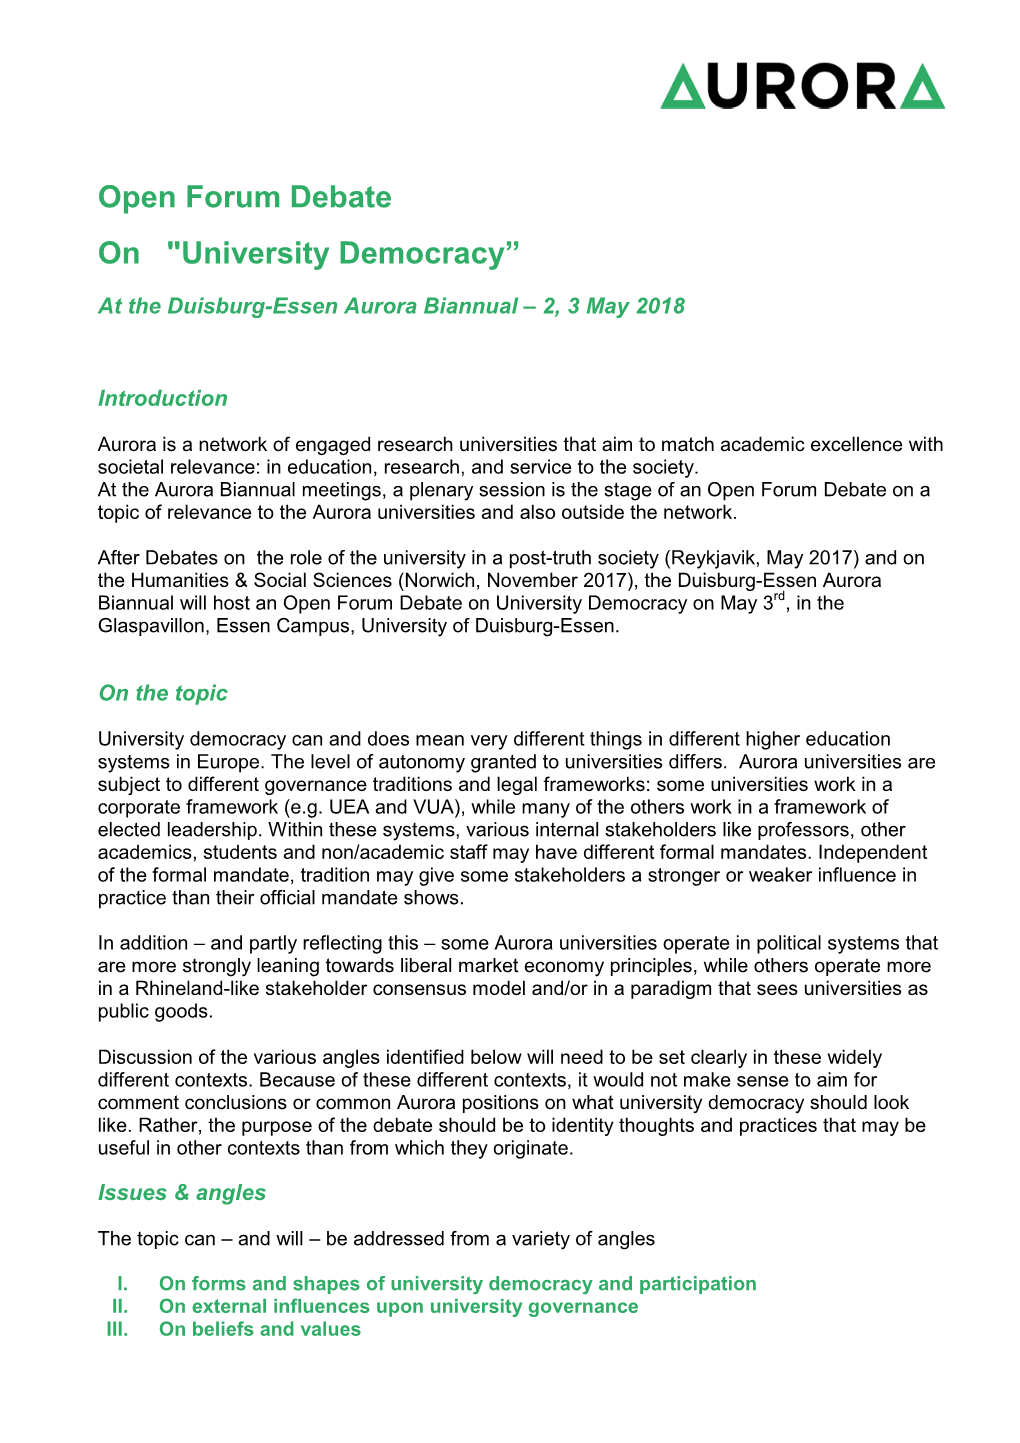 Open Forum Debate on "University Democracy”